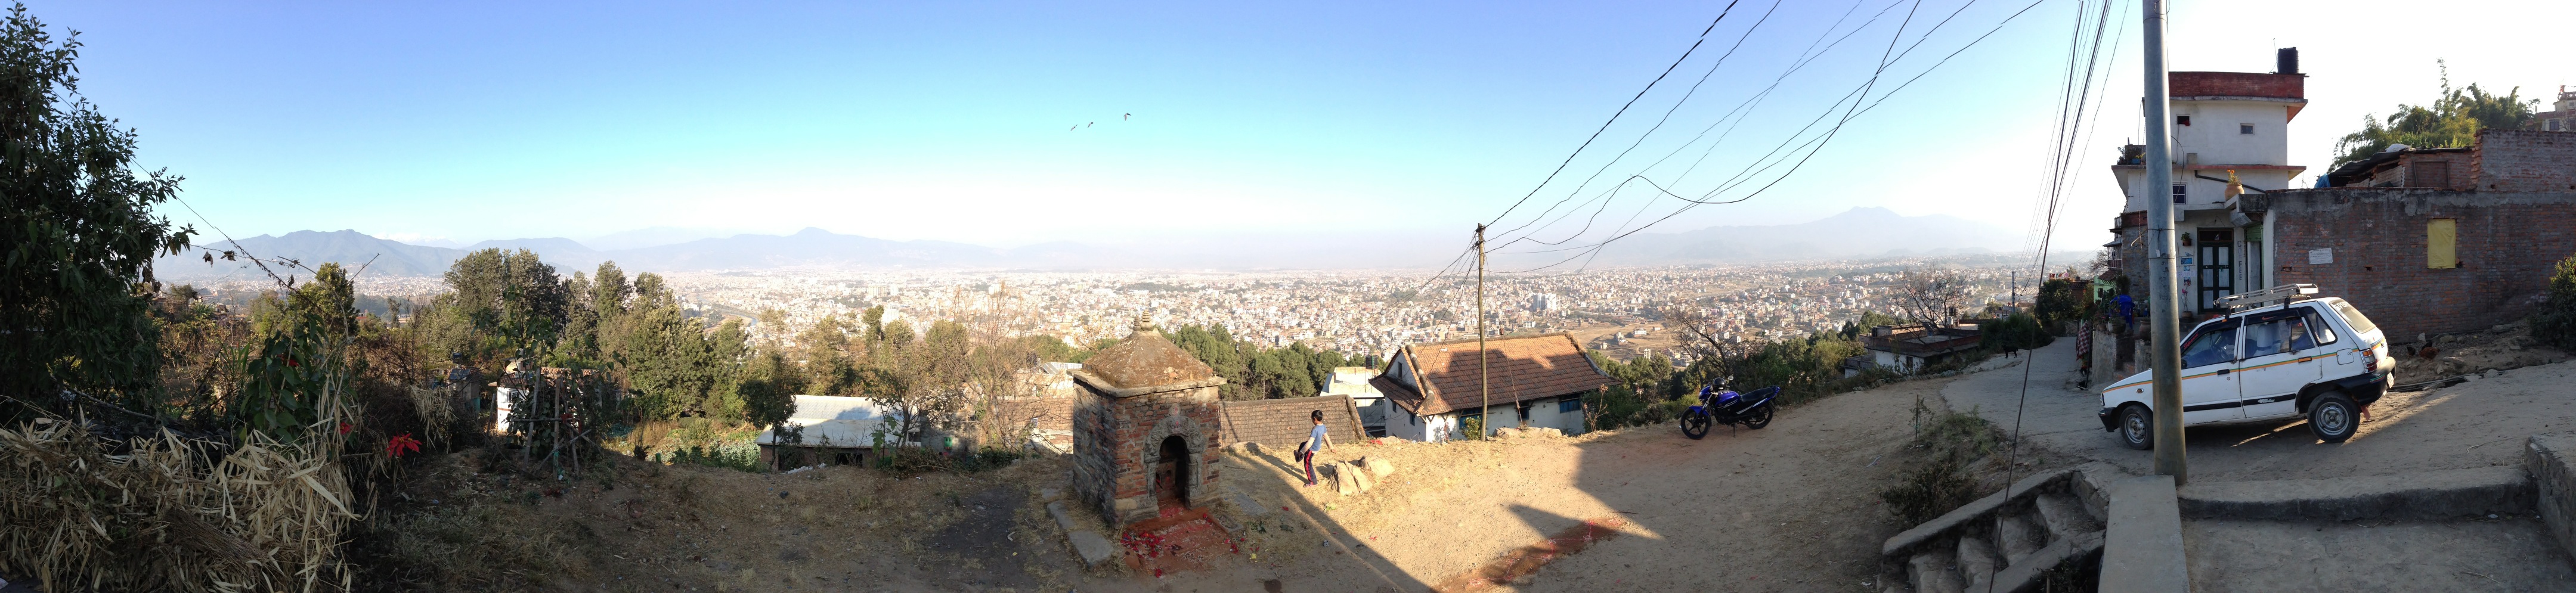 Ausblick auf Kathmandu